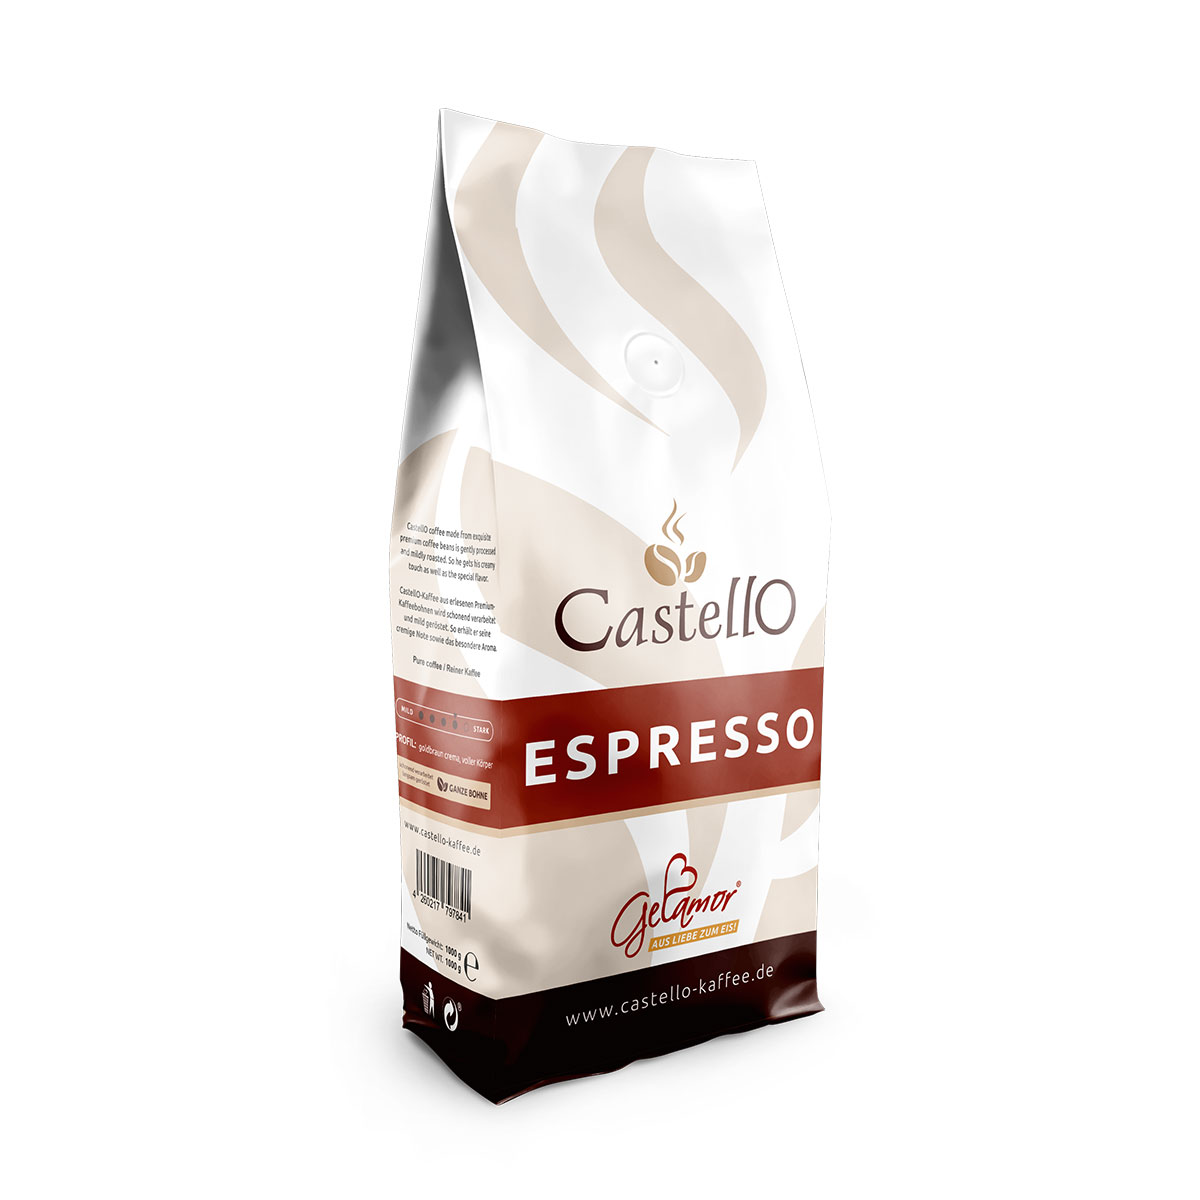 Castello Espresso Gelamor